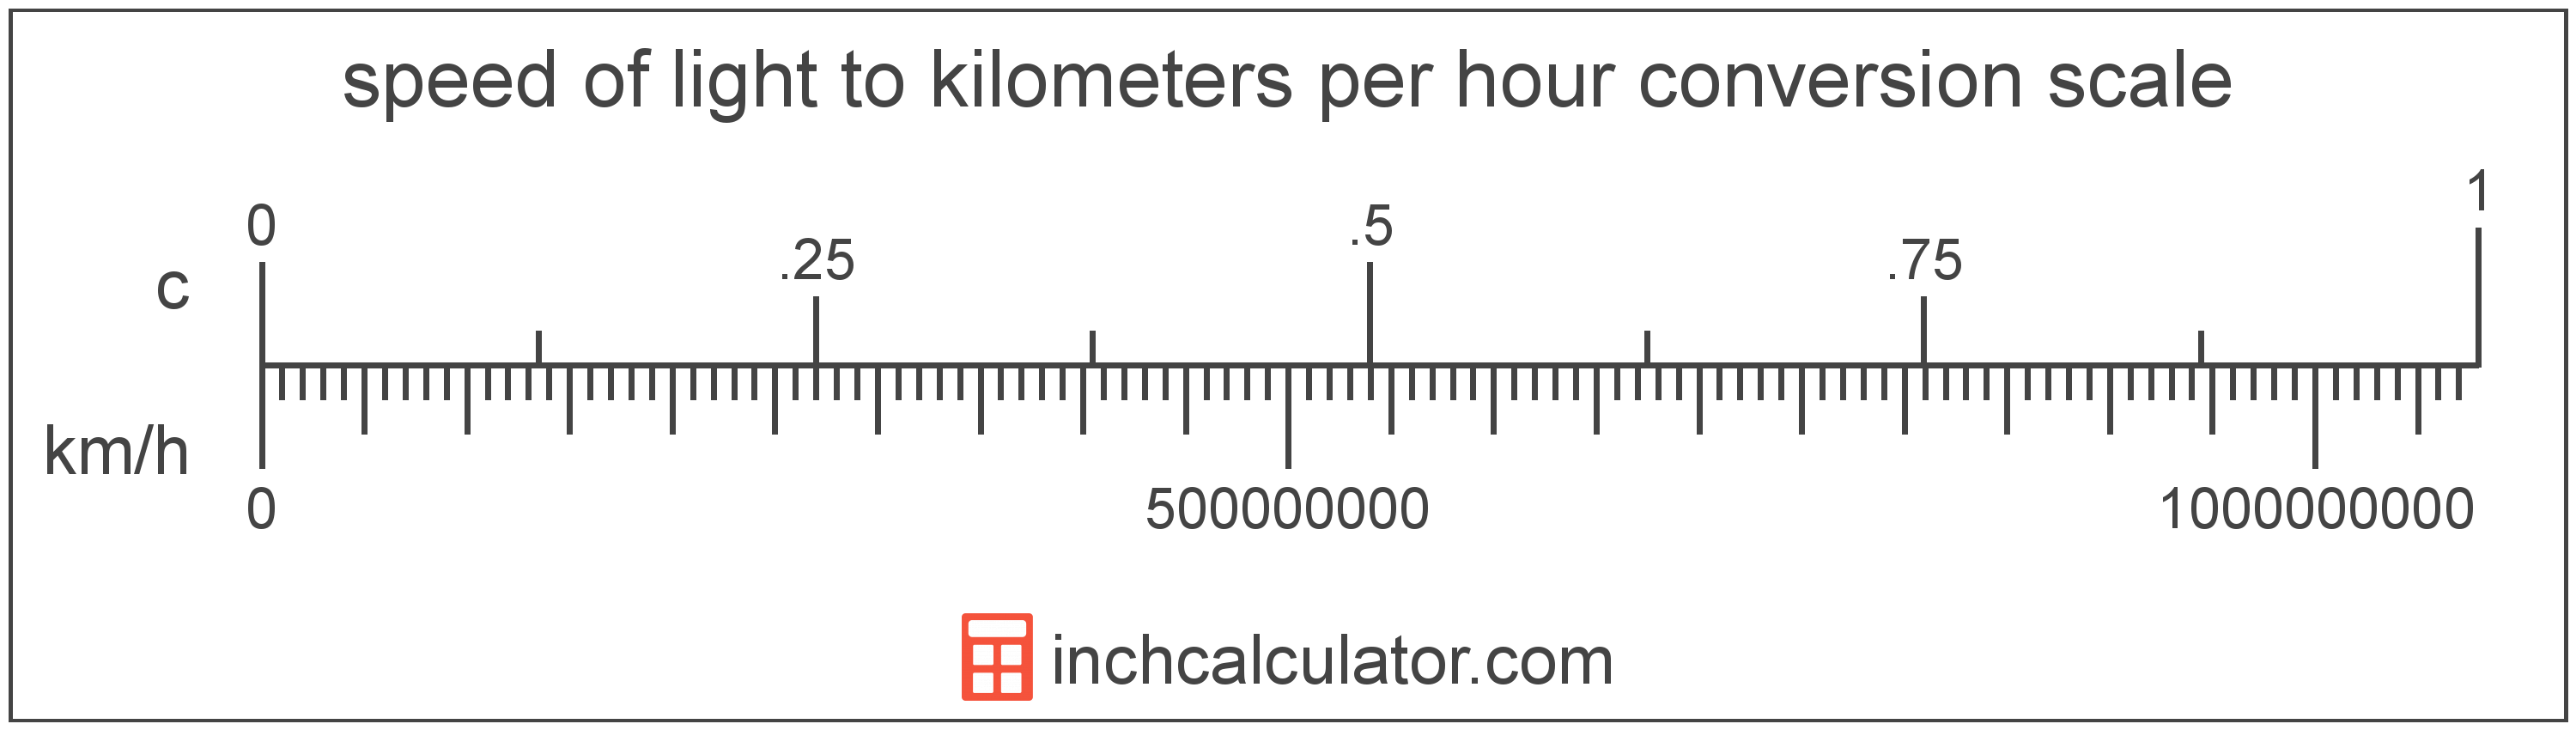 Light to Kilometers per Hour Conversion to km/h)